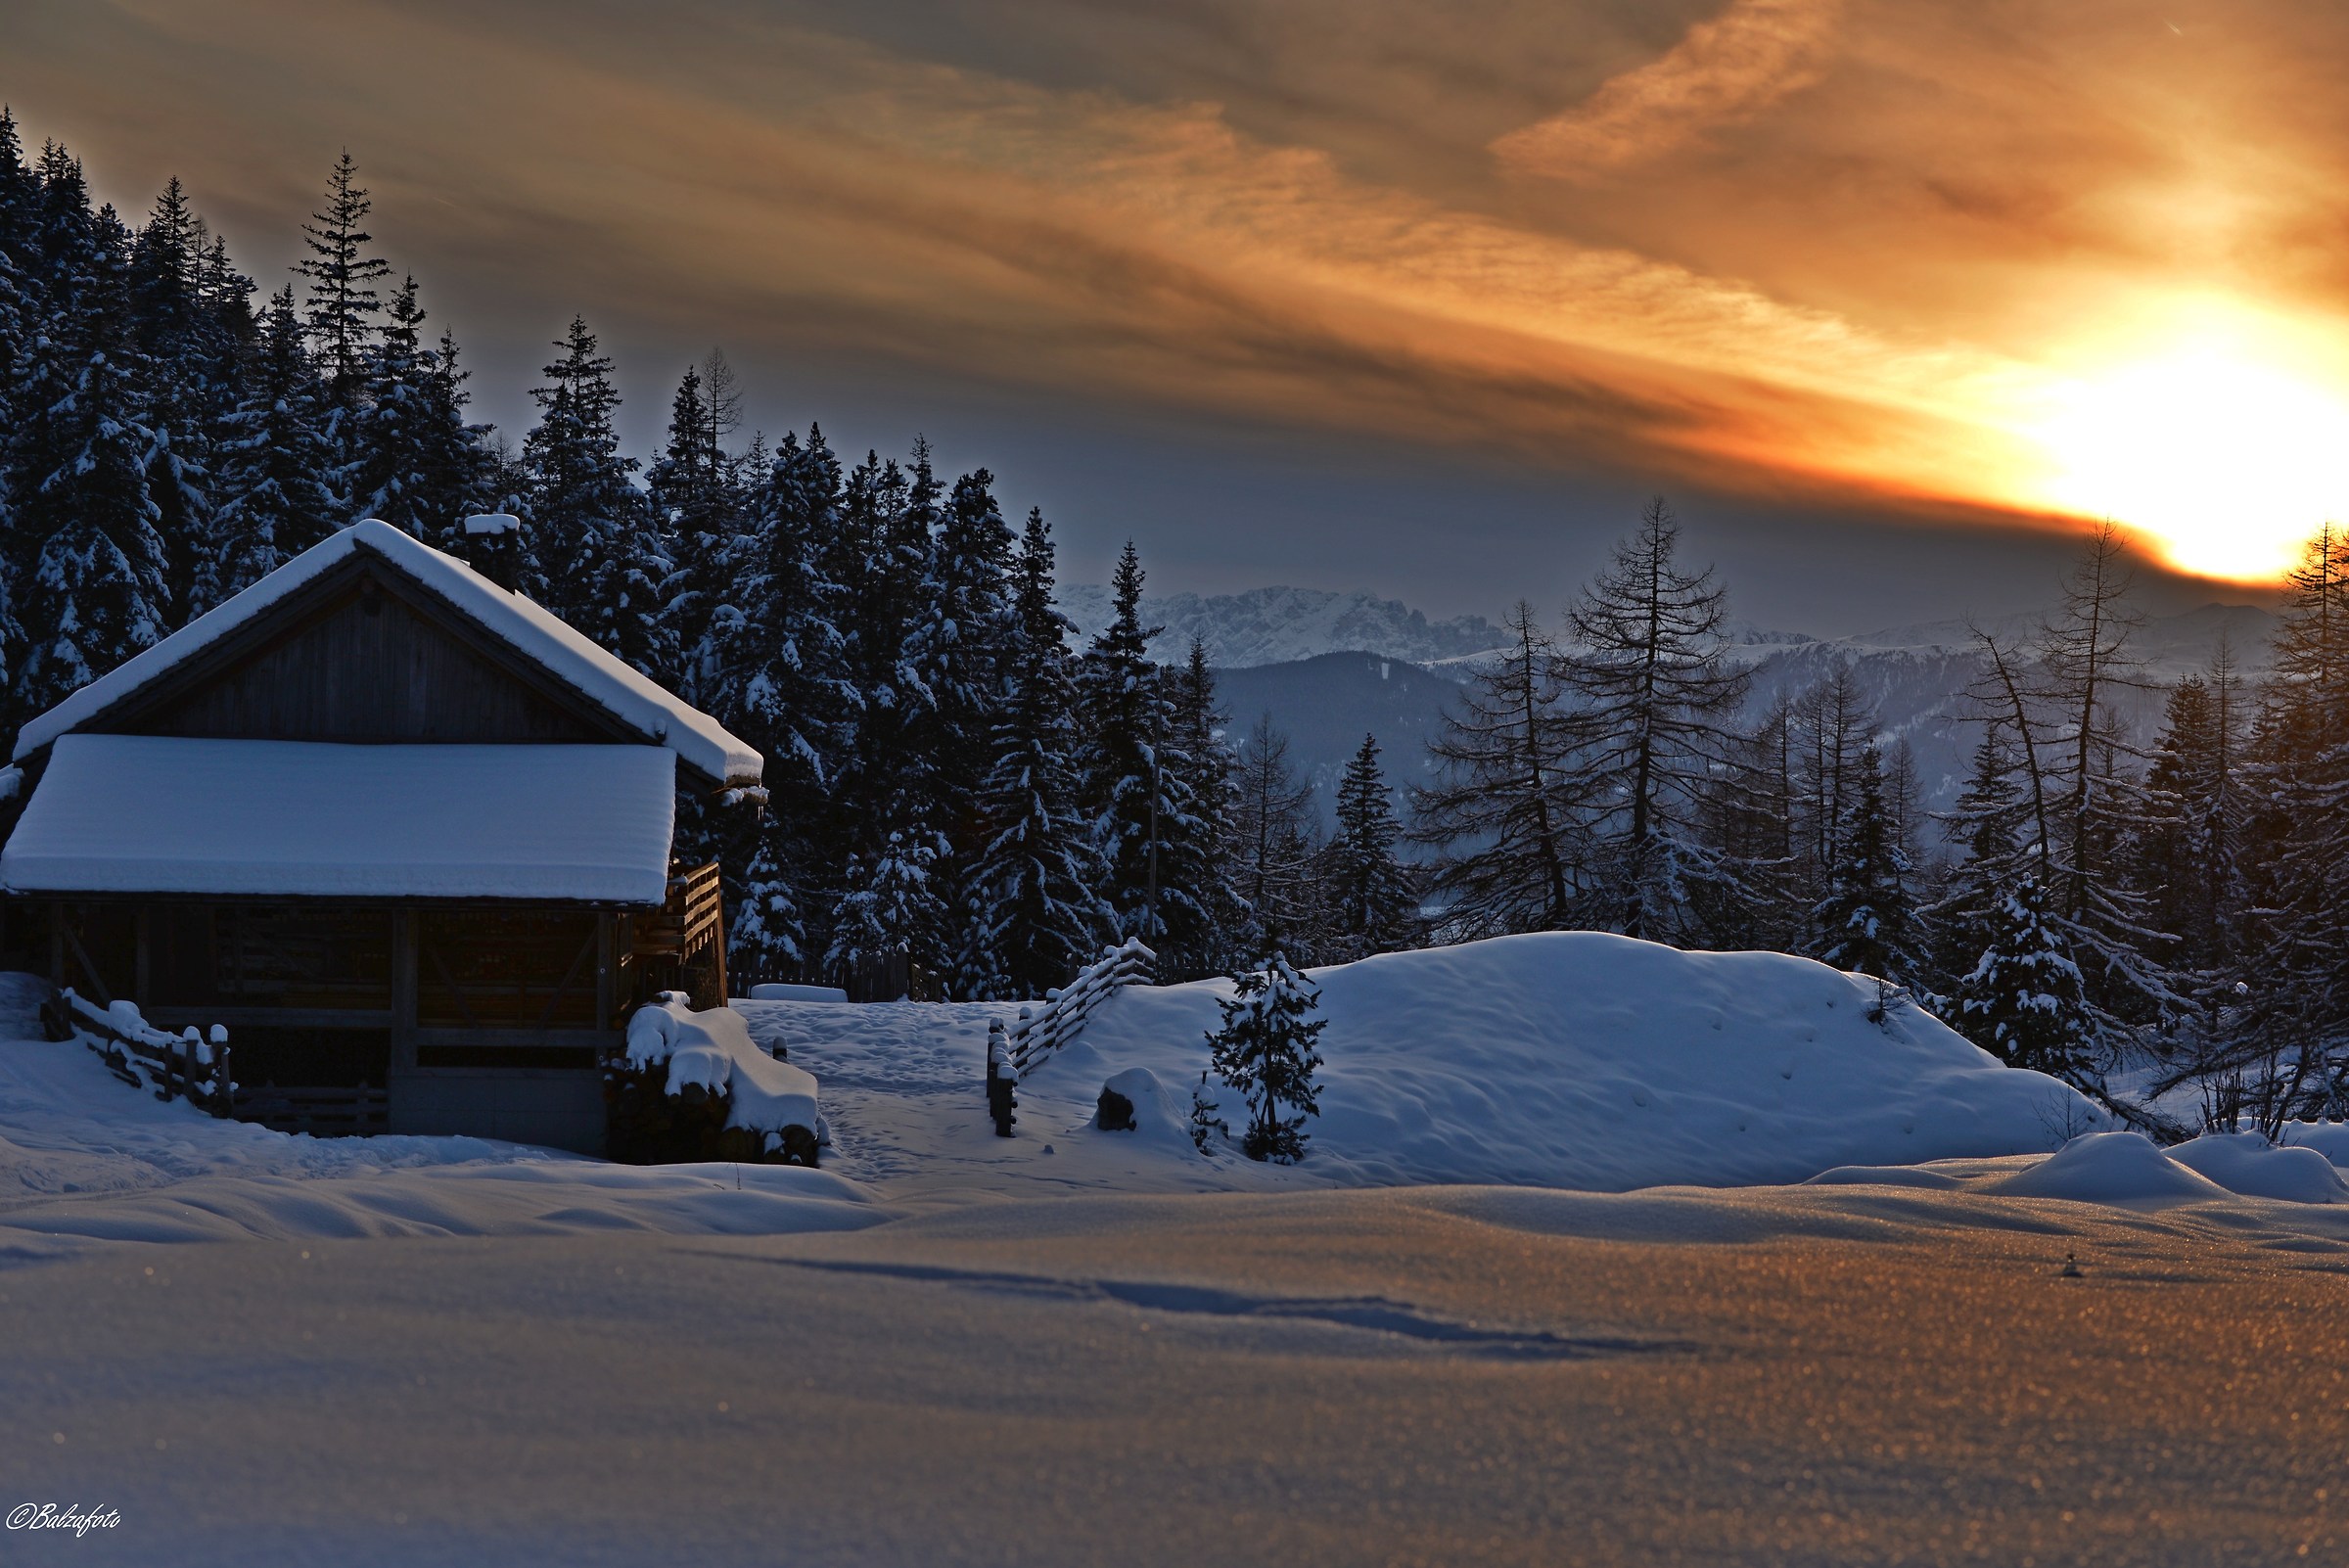 Winter landscape at sunset...